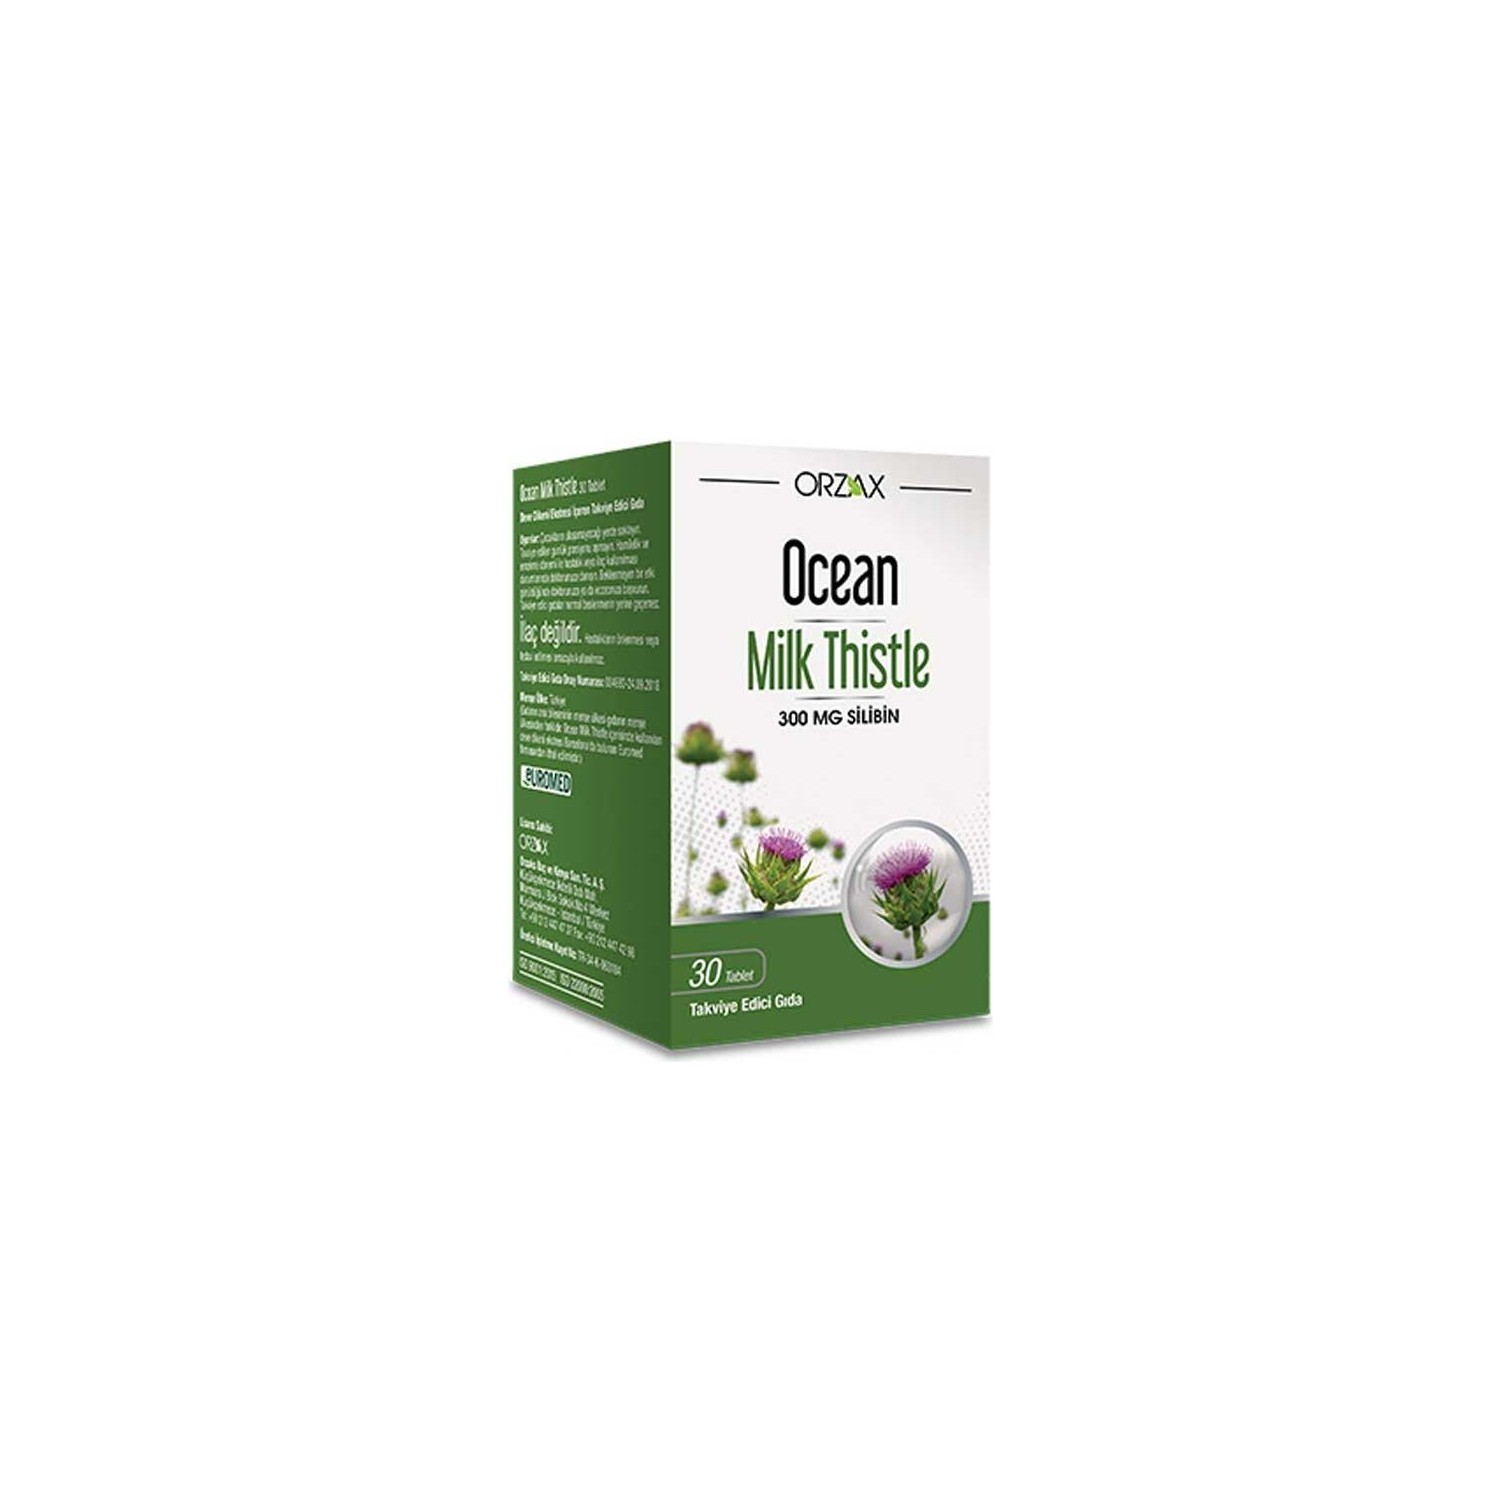 Пищевая добавка Orzax Ocean Milk Thistle Supplementary Food, 30 таблеток supplementary tariff freight disparity